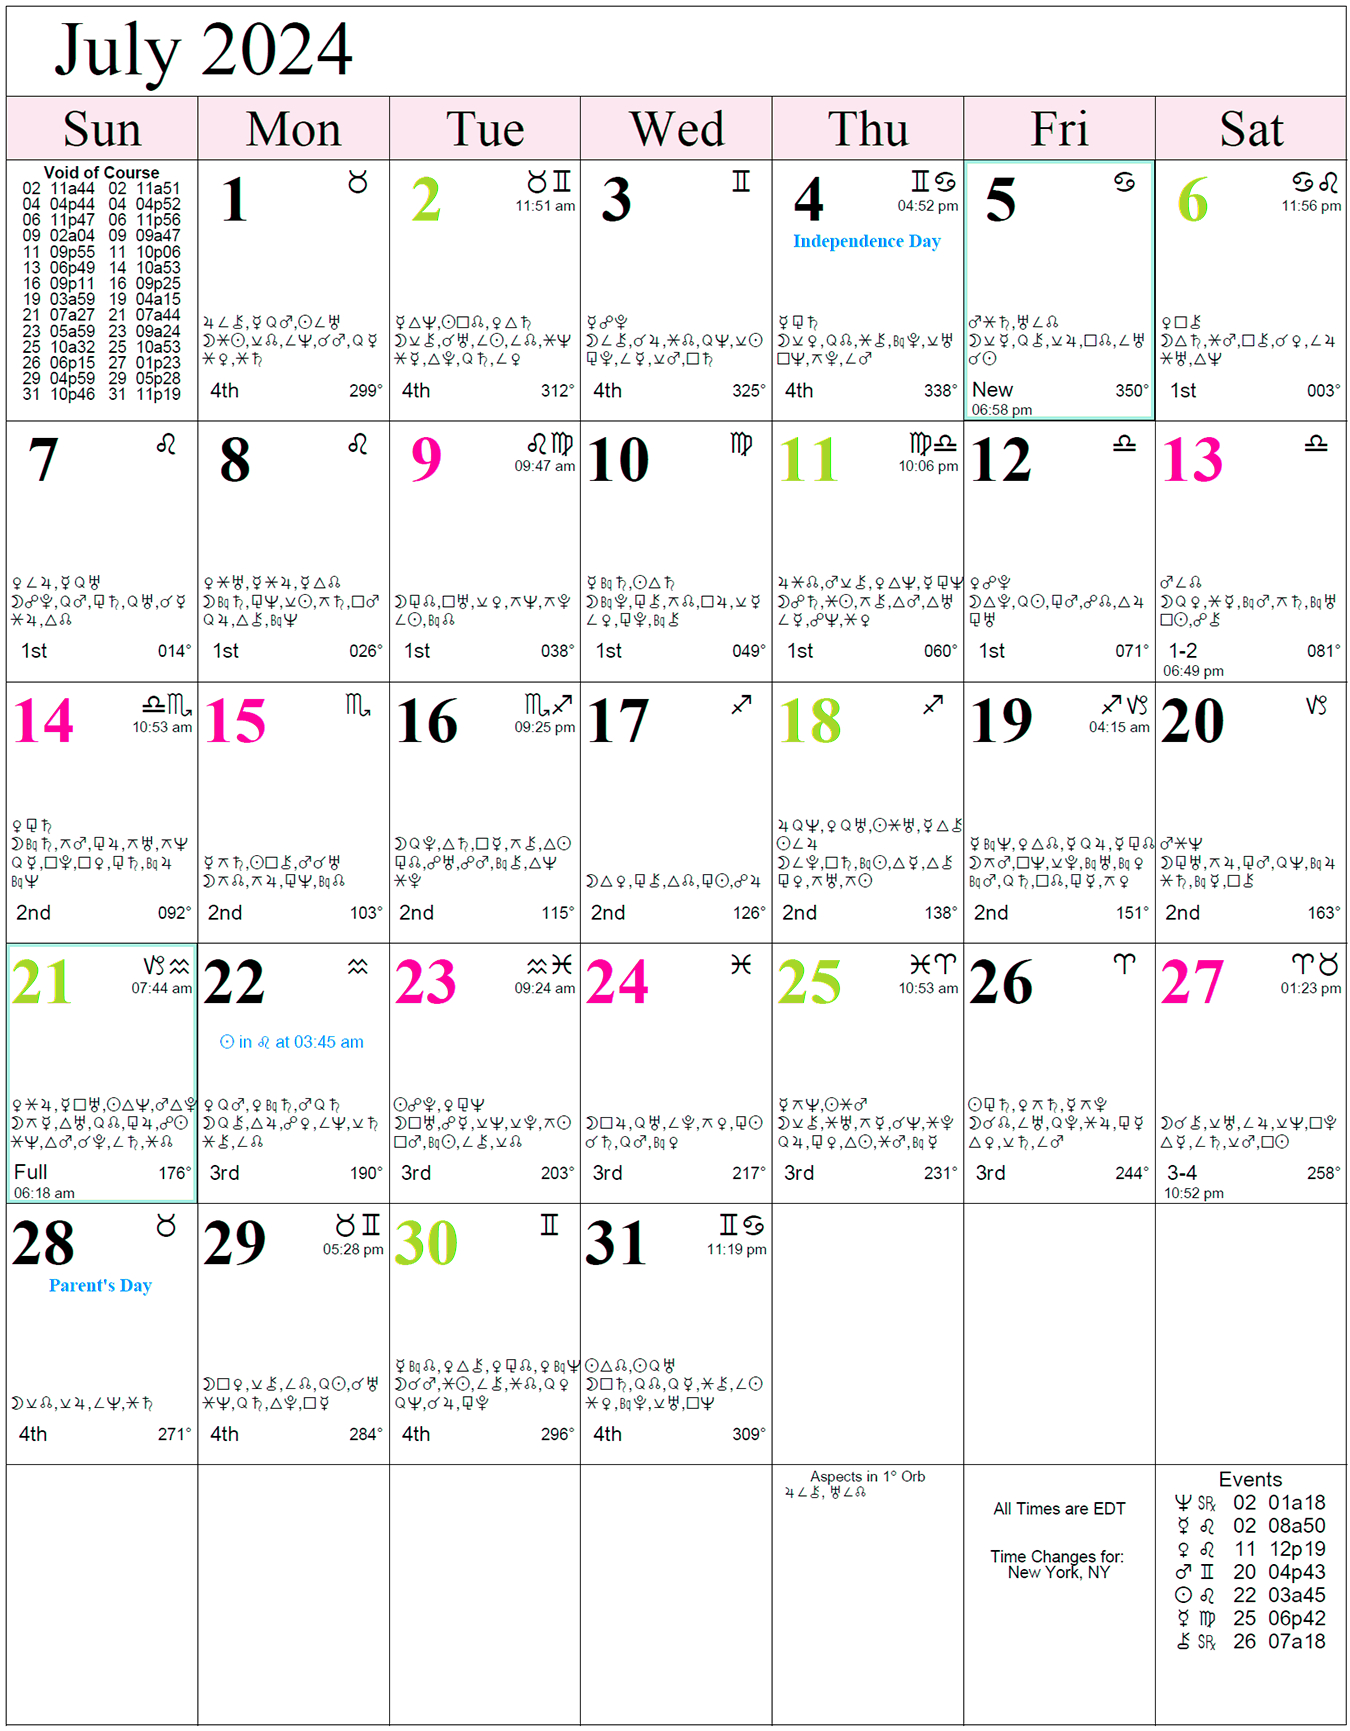 Monthly Astro Calendars | Cafe Astrology | Astrology Calendar July 2024